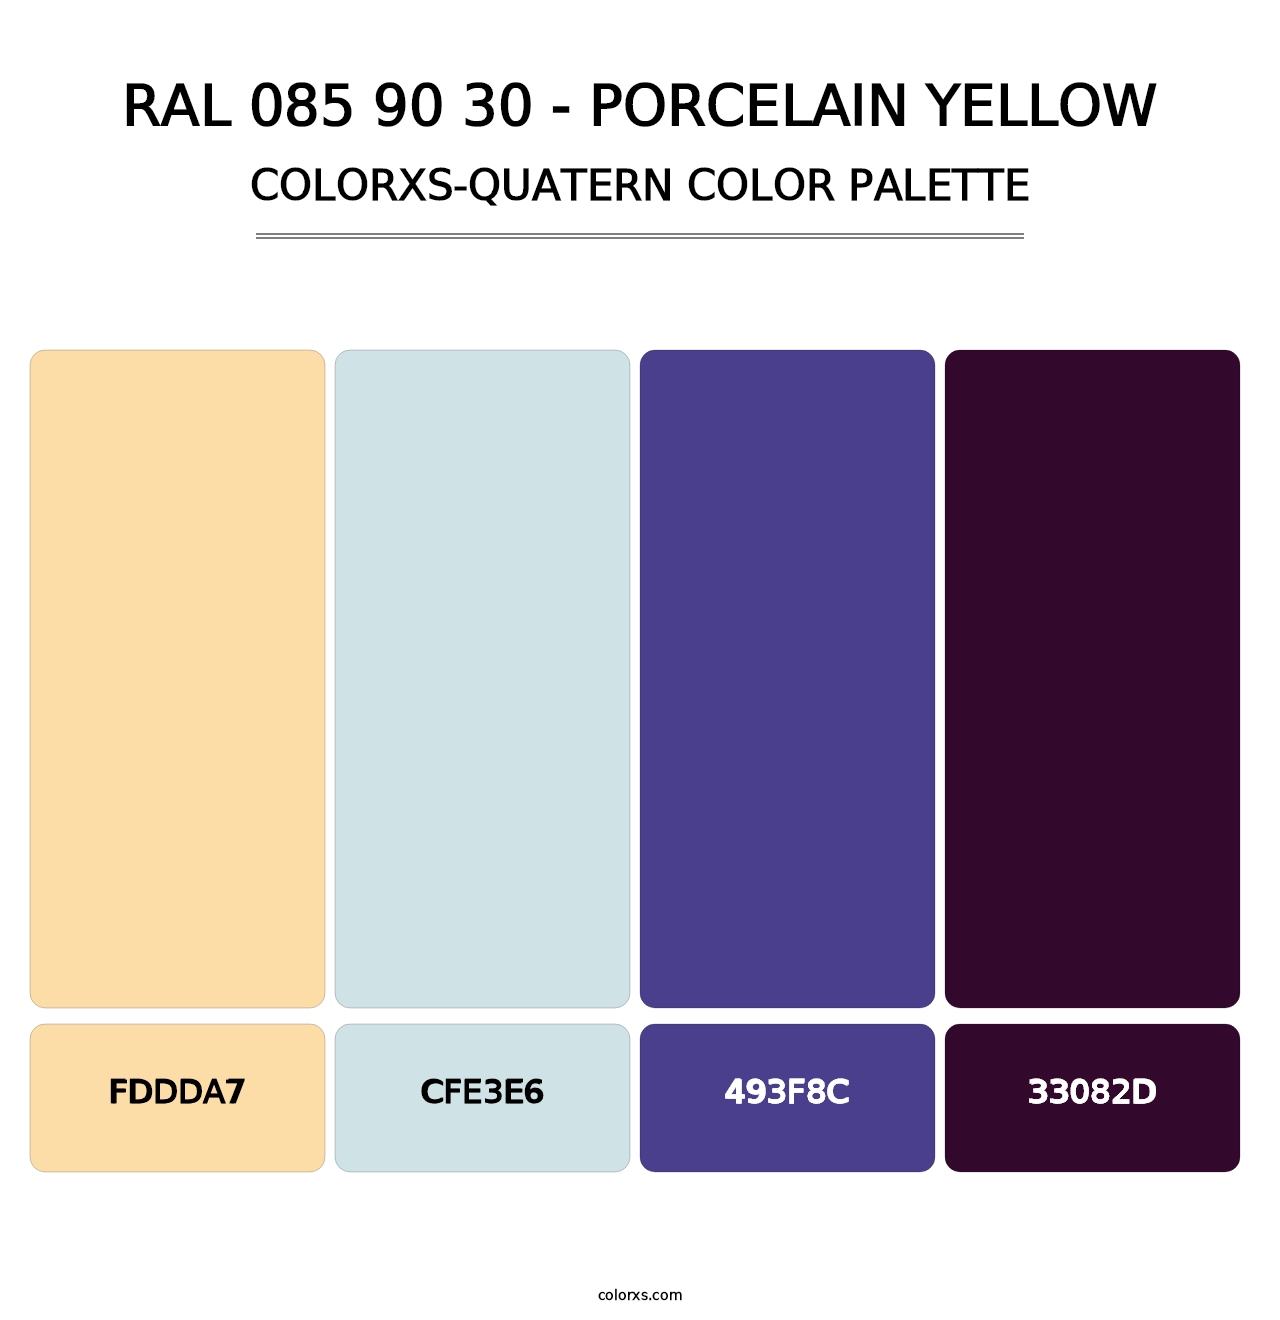 RAL 085 90 30 - Porcelain Yellow - Colorxs Quatern Palette